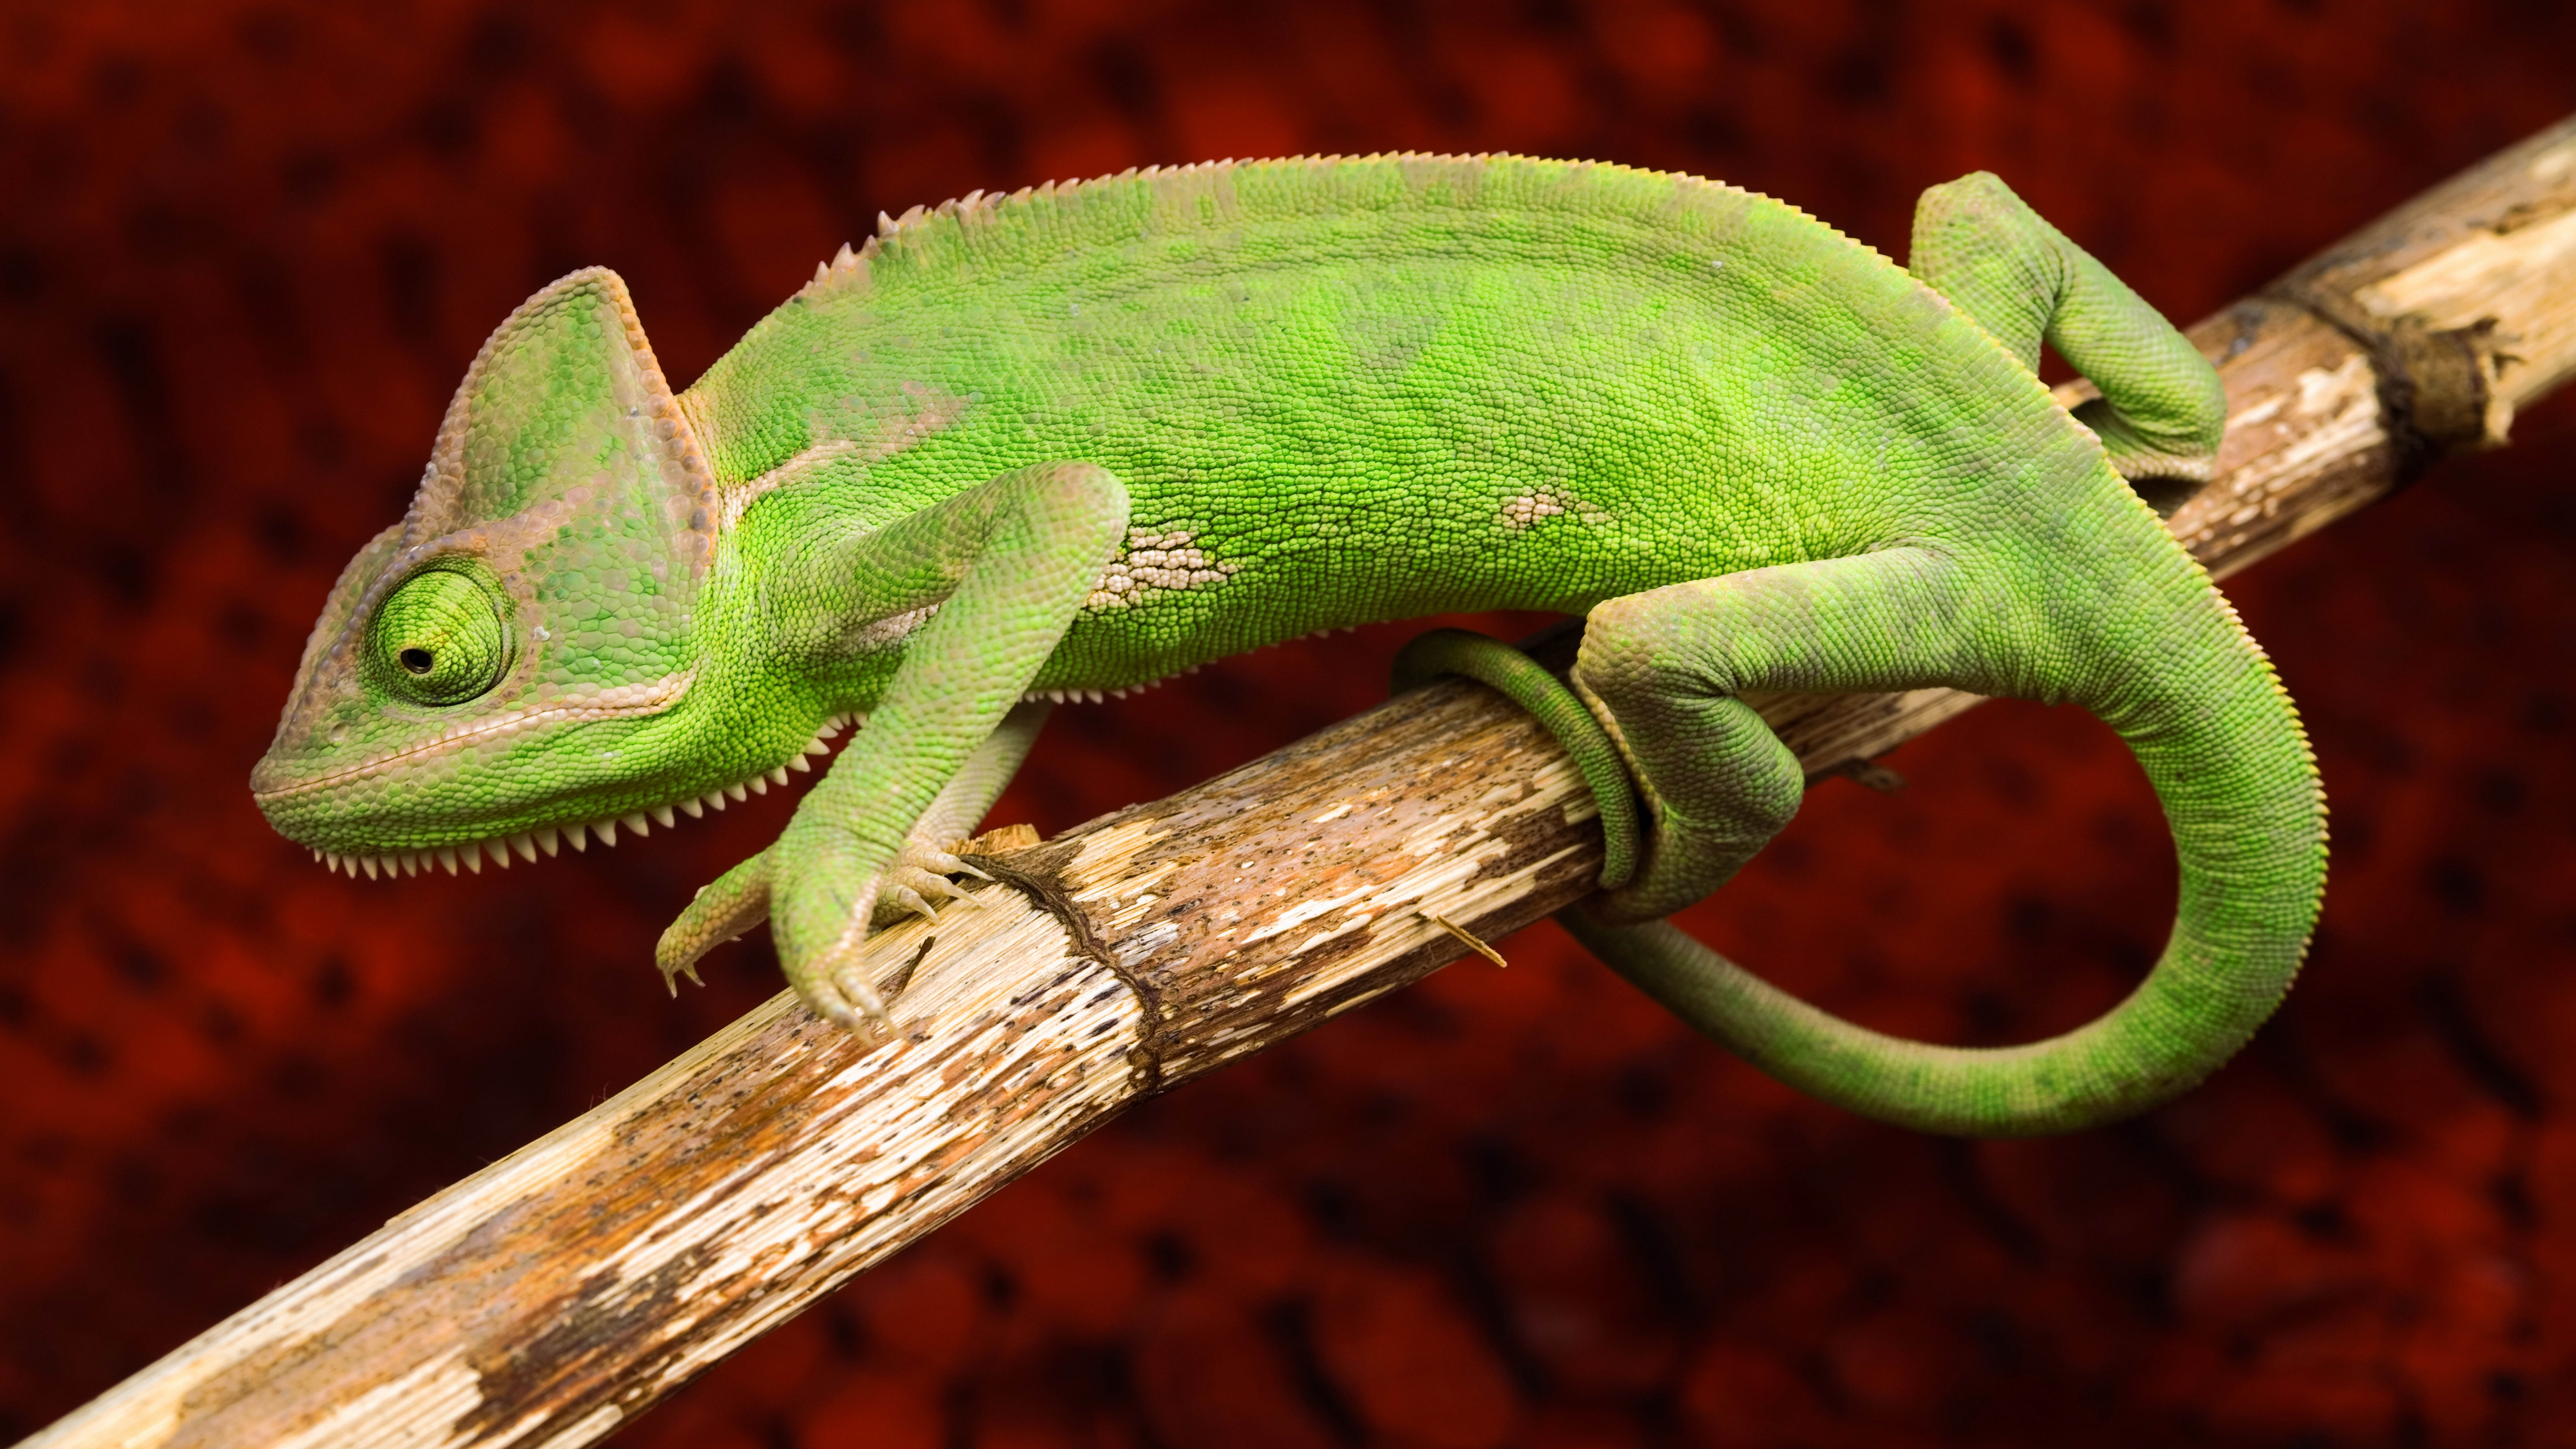 Wallpaper Chameleon Lizard Green Animals 5375